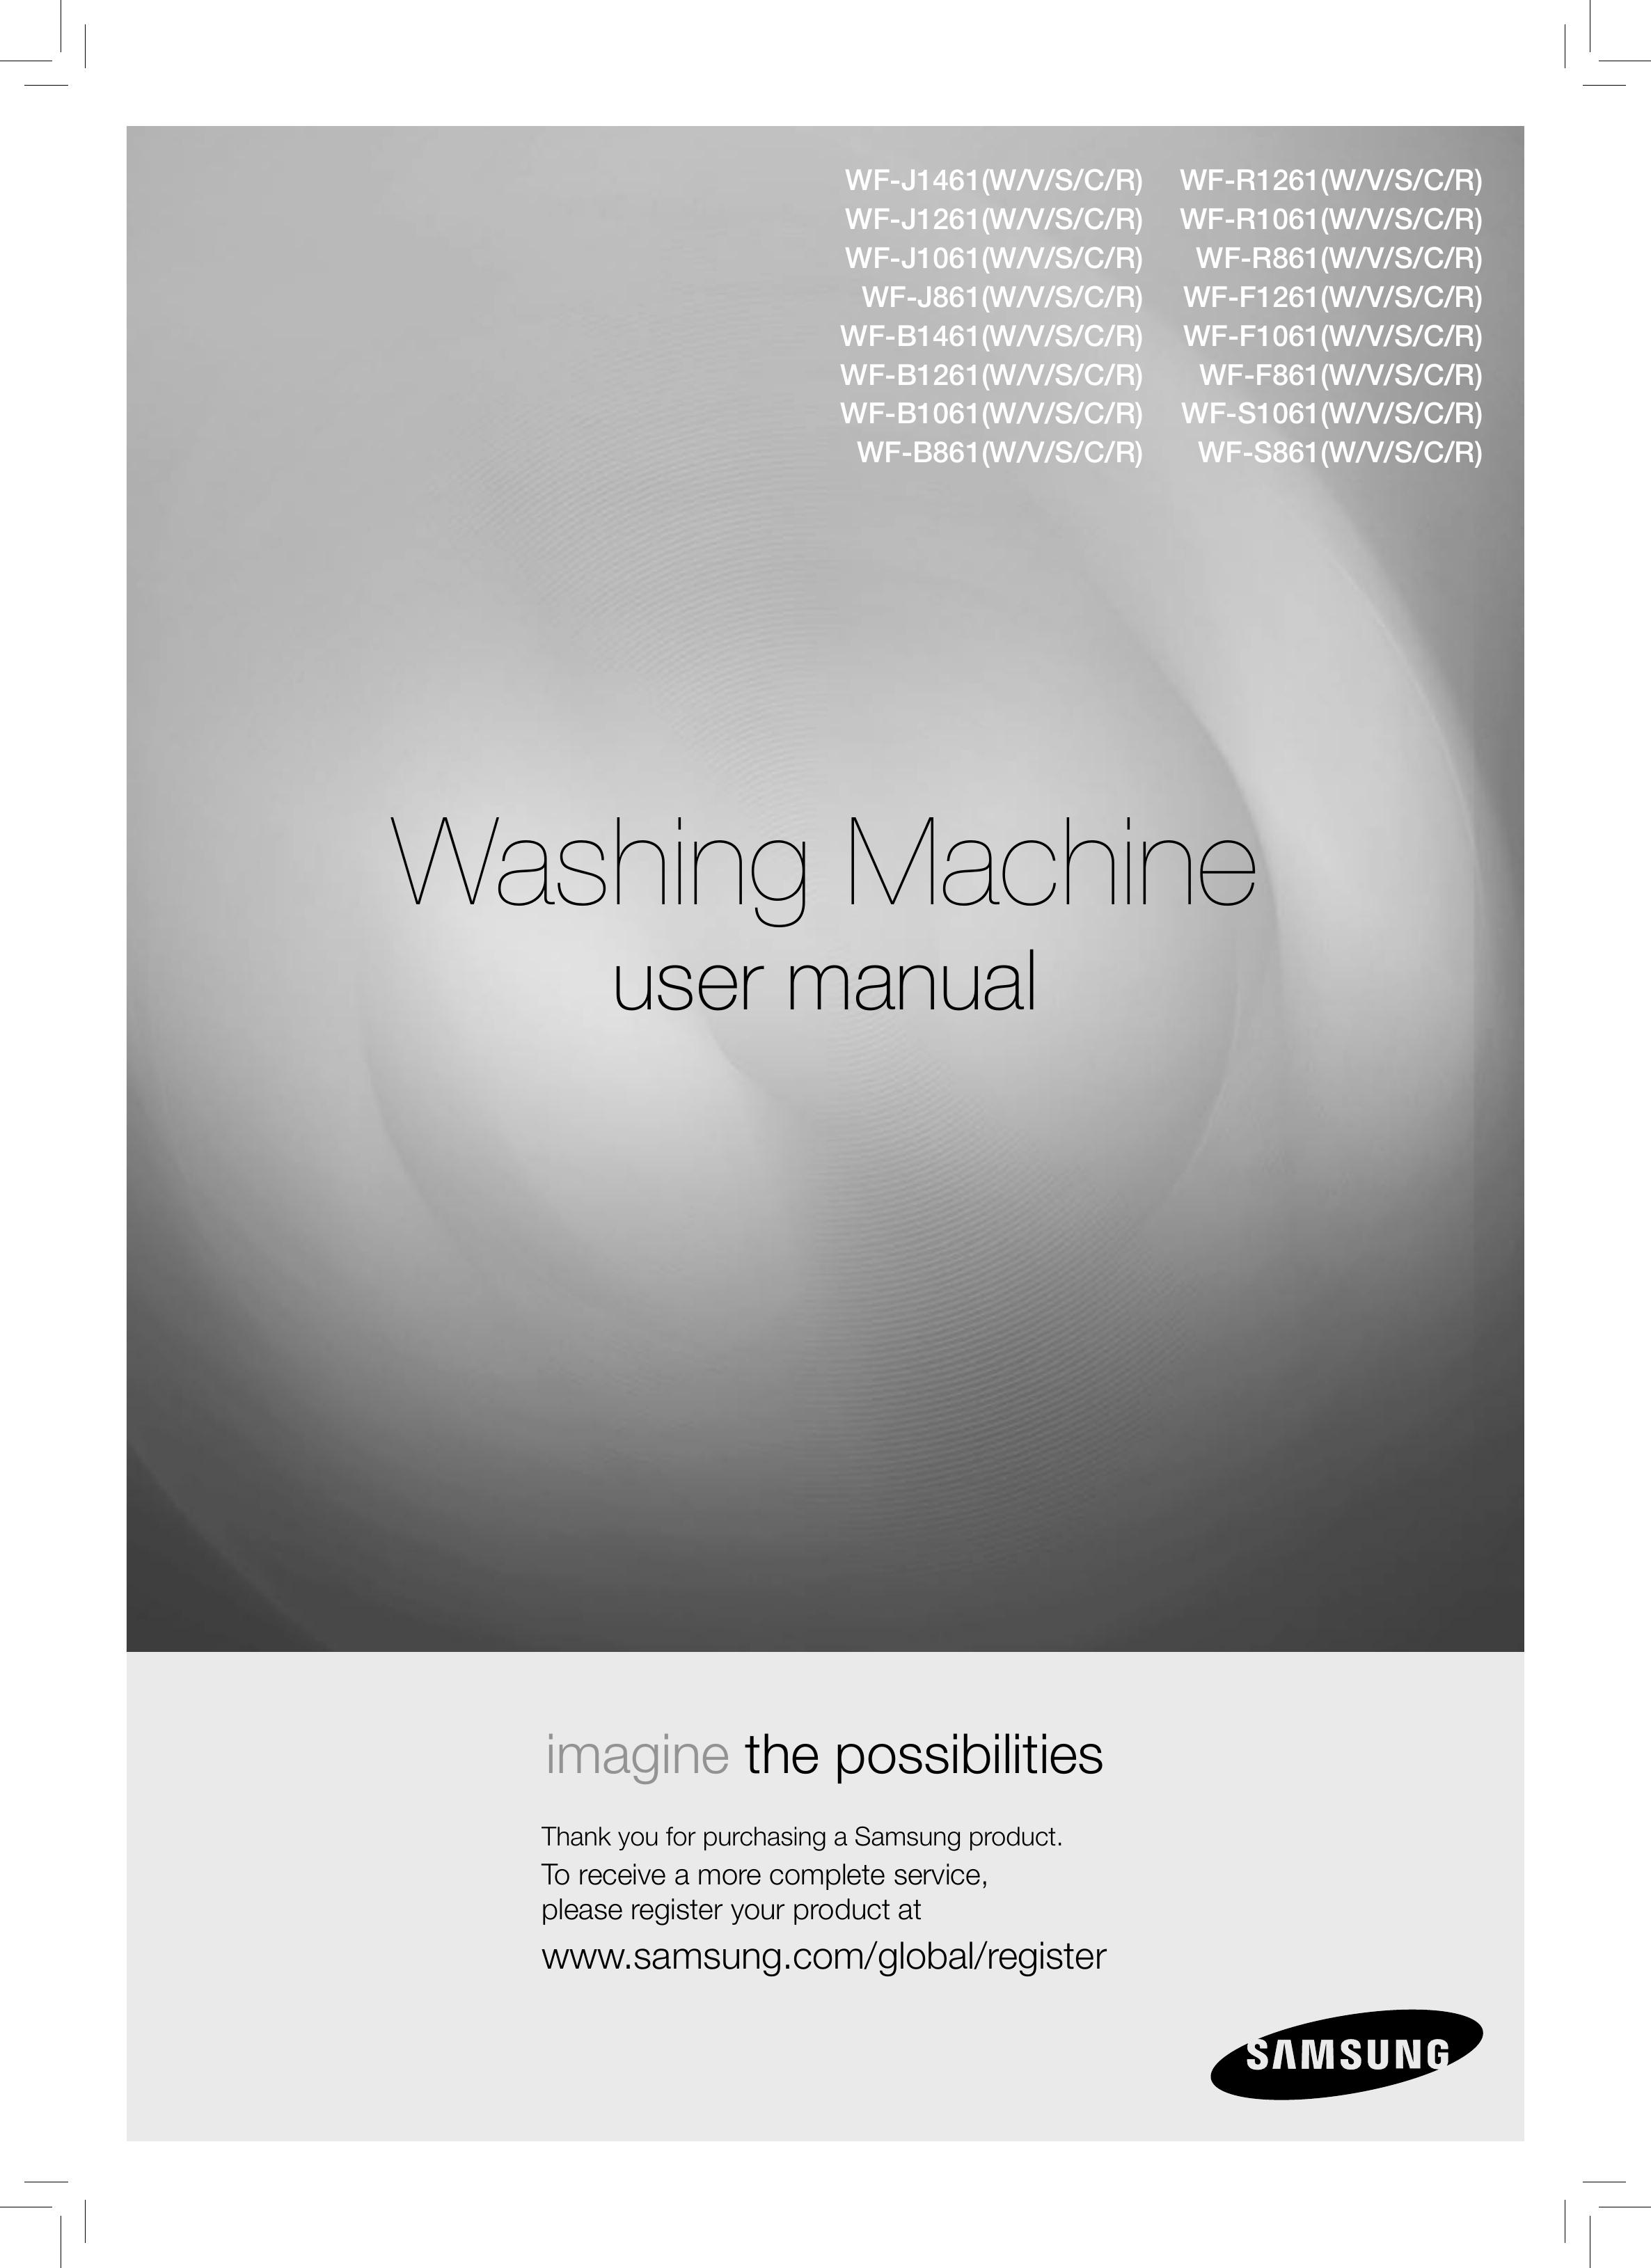 Samsung WF-B1461 Washer/Dryer User Manual